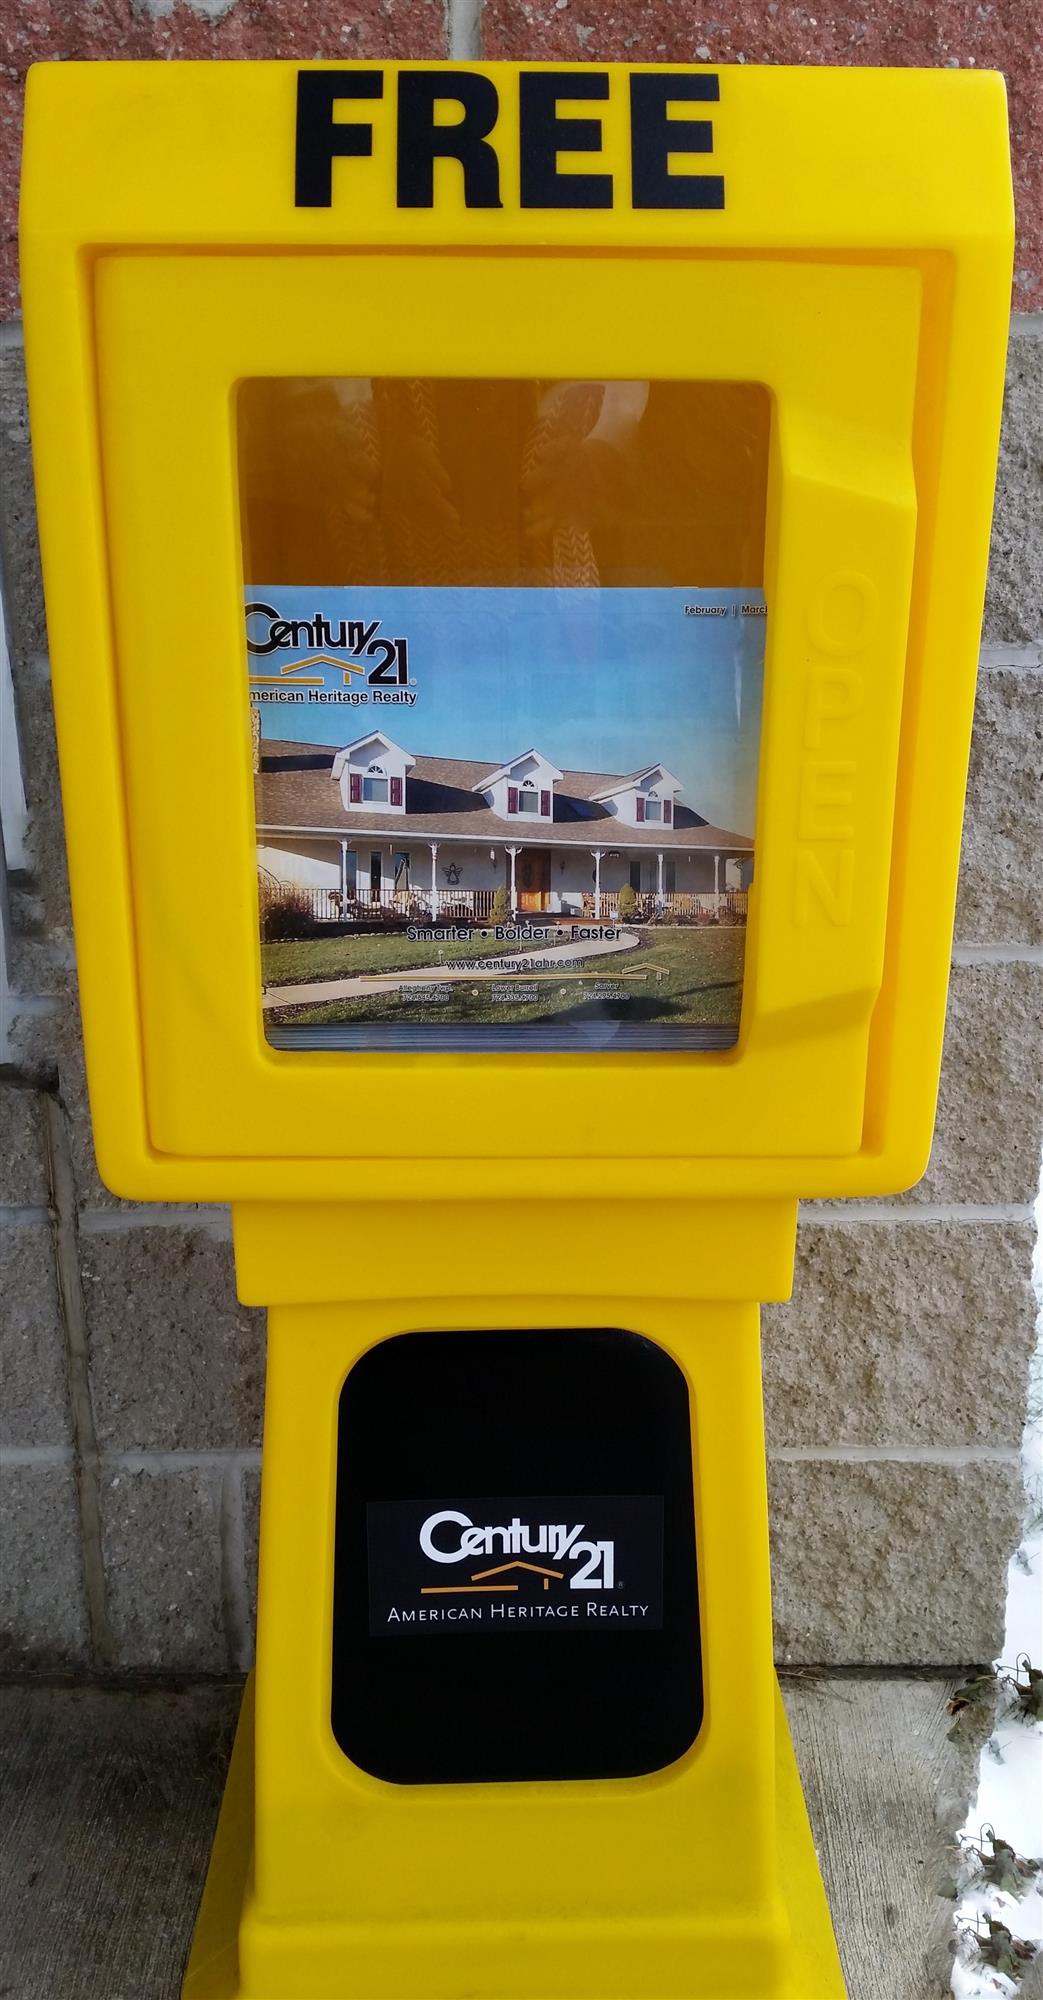 Newspaper Vending Machine containing Century 21 American Heritage Realty Magazine.